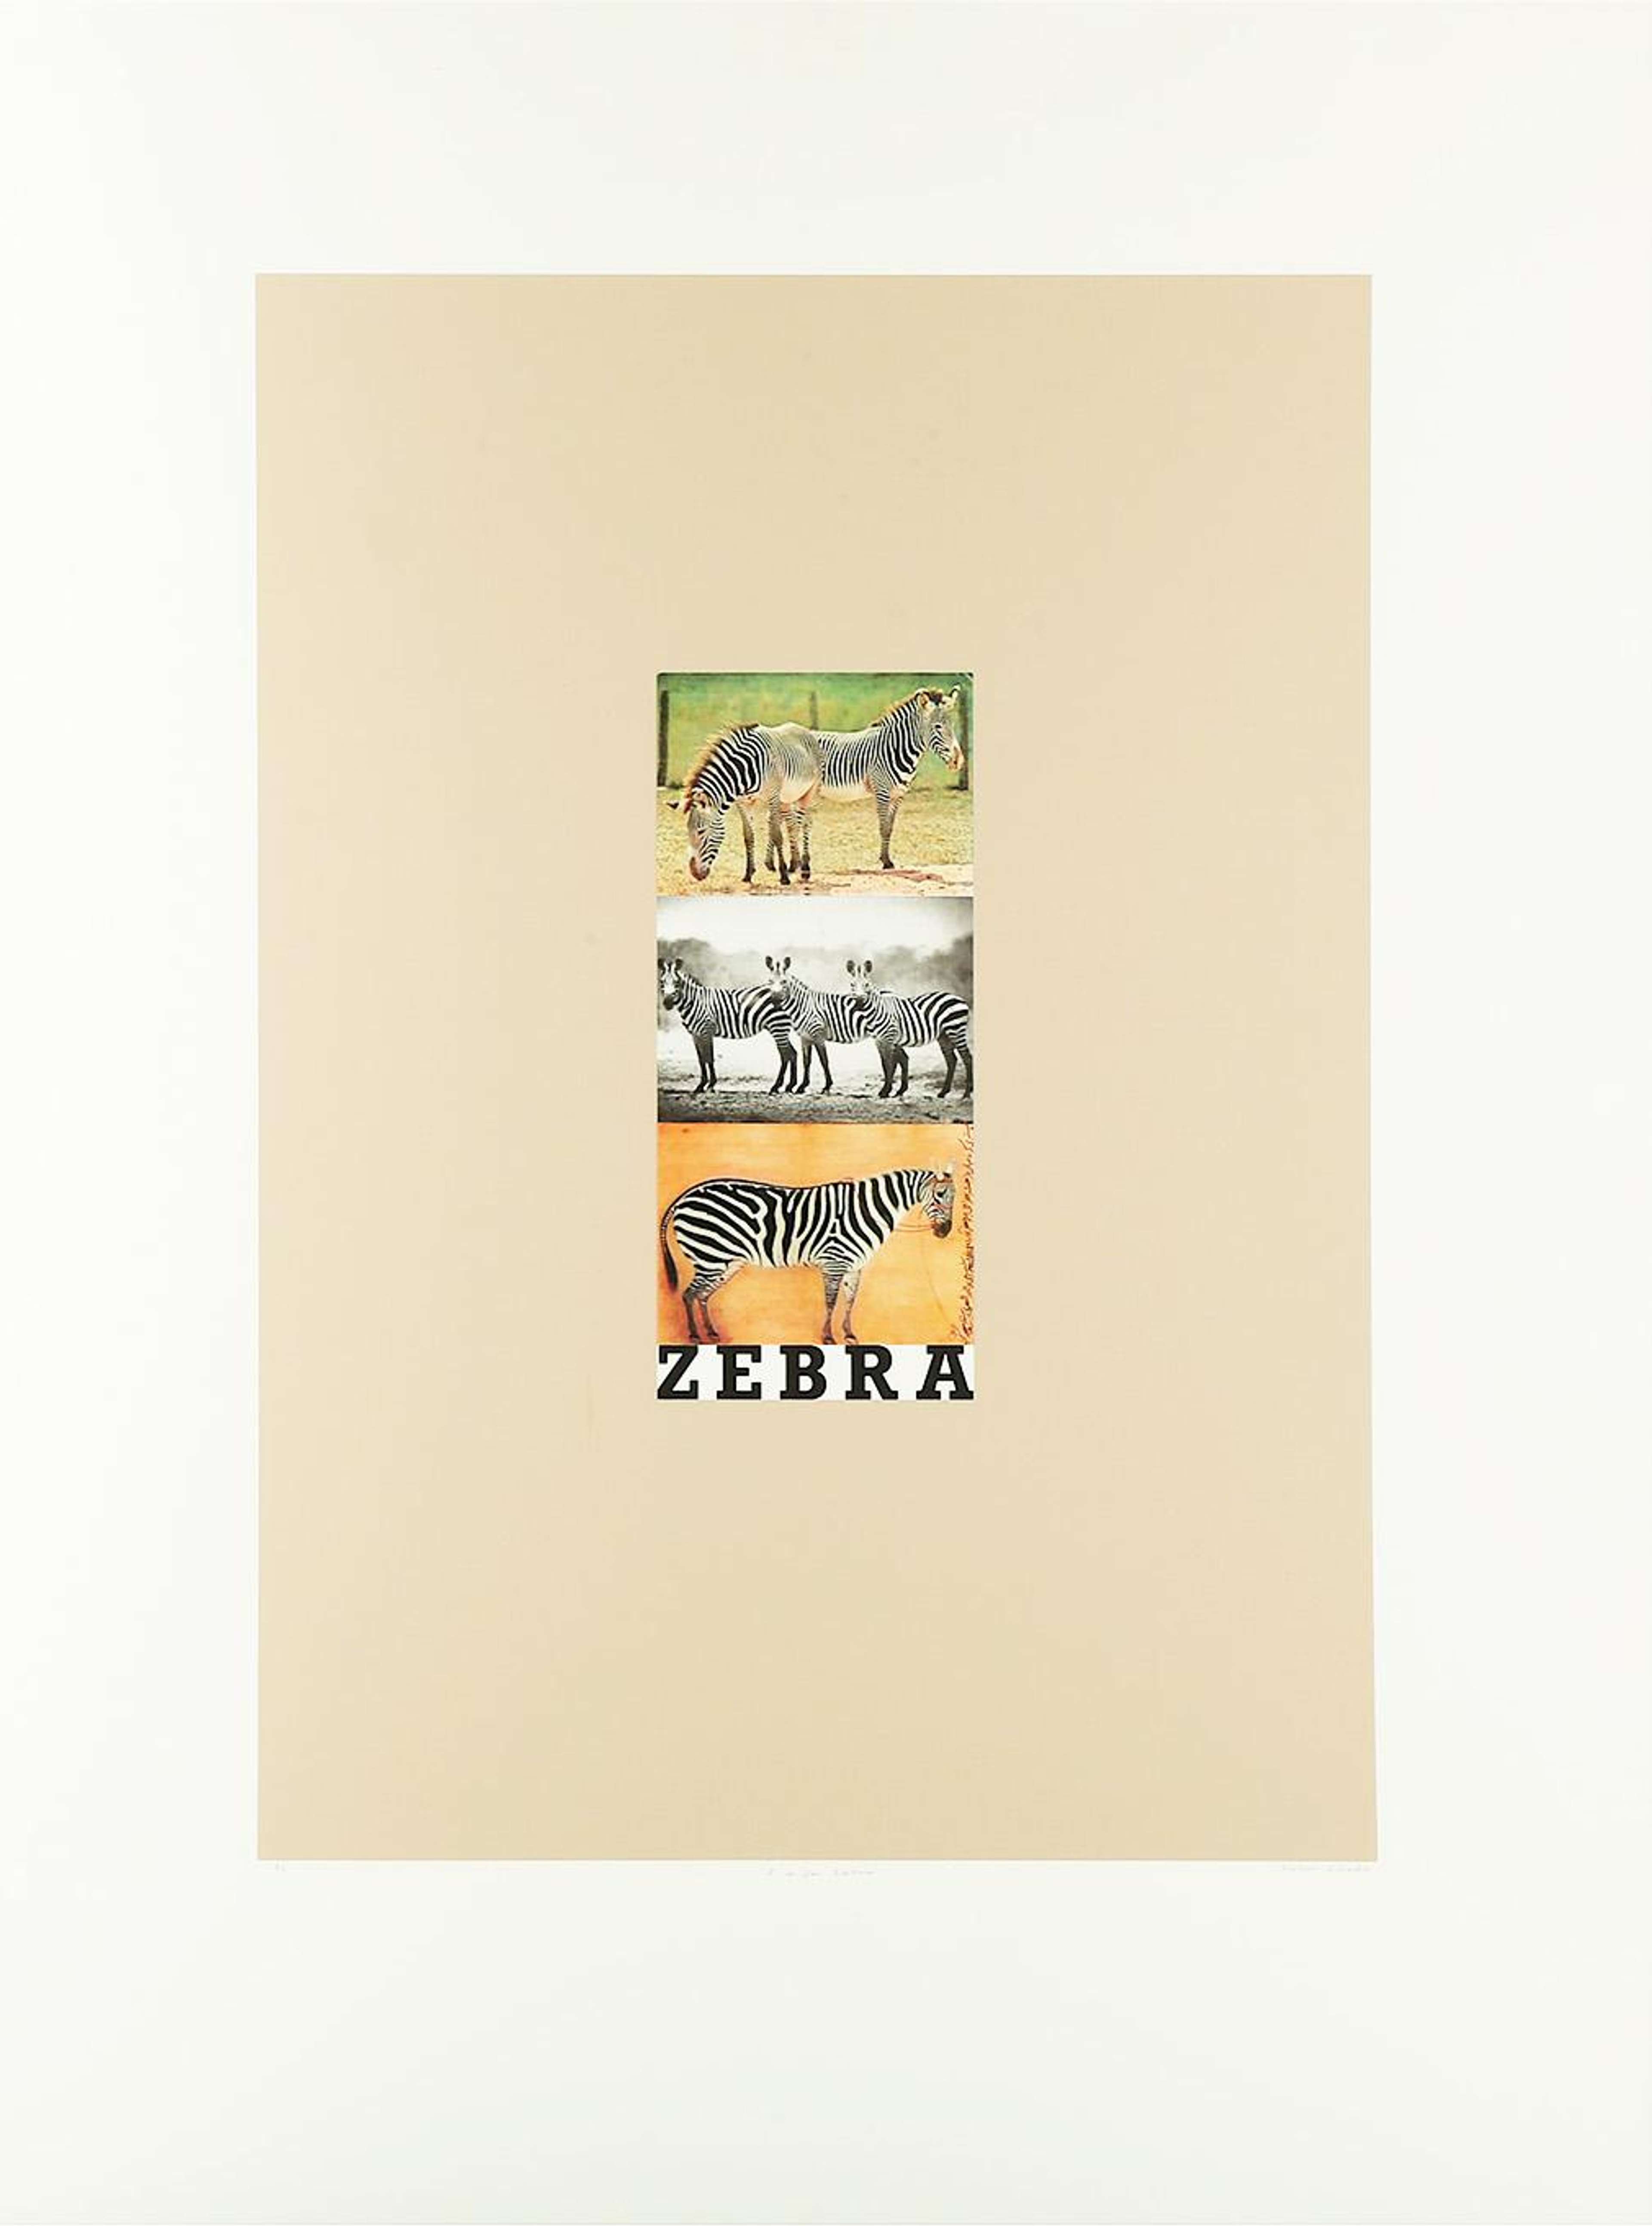 Z Is For Zebra - Signed Print by Peter Blake 1991 - MyArtBroker